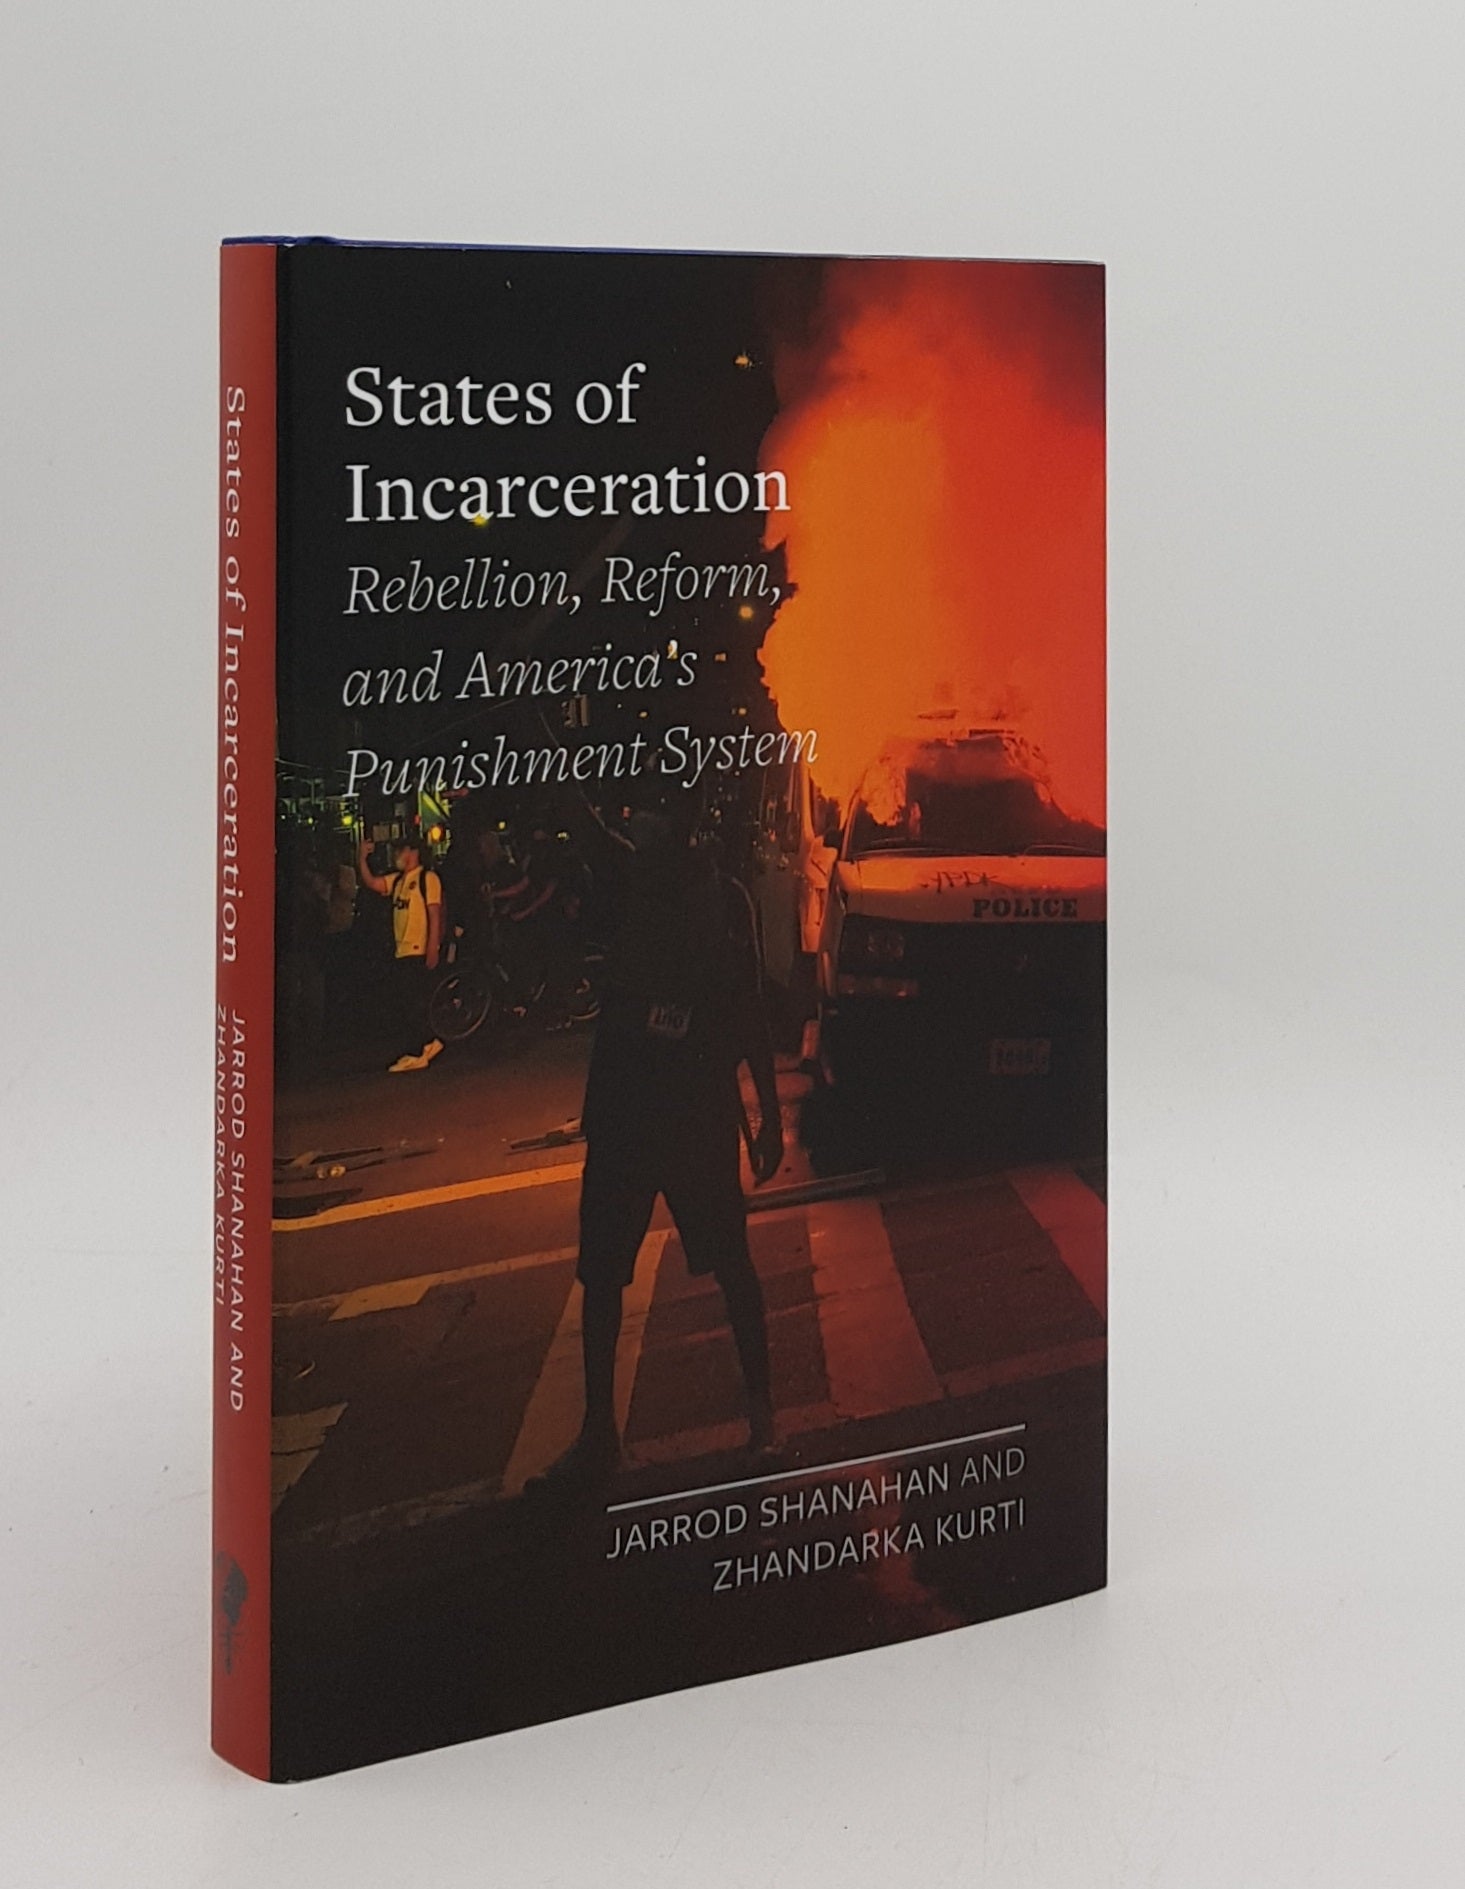 SHANAHAN Jarrod, KURTI Zhandarka - States of Incarceration Rebellion Reform and America's Punishment System (Field Notes)